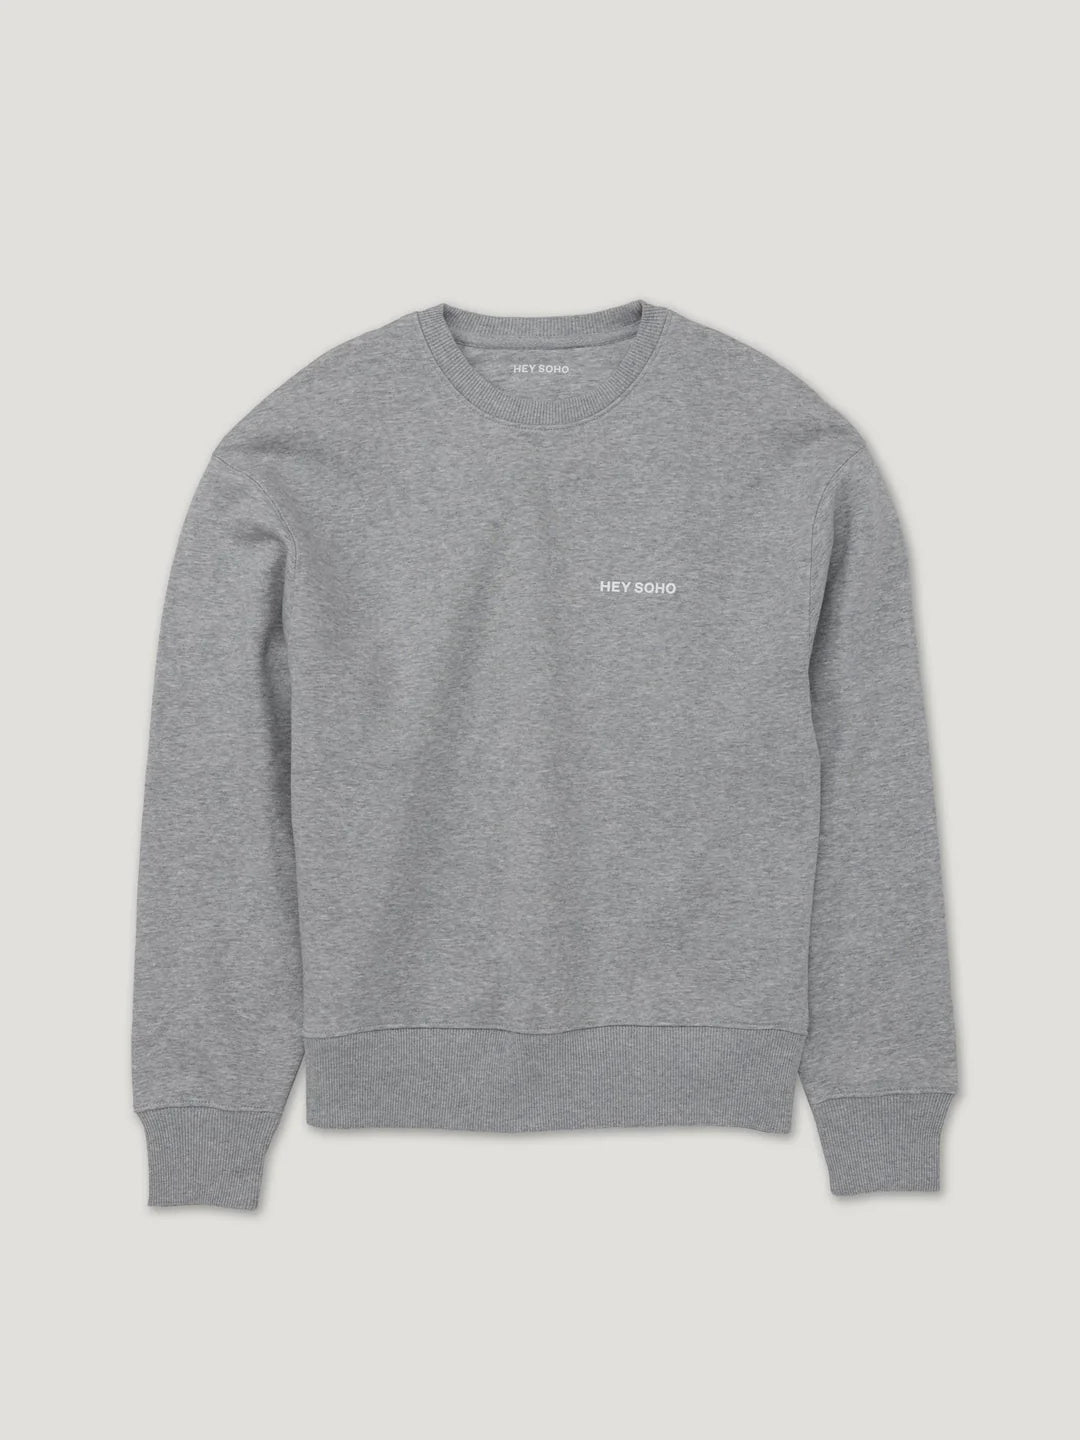 energy-sweater-grau-217892_1080x_jpg.webp